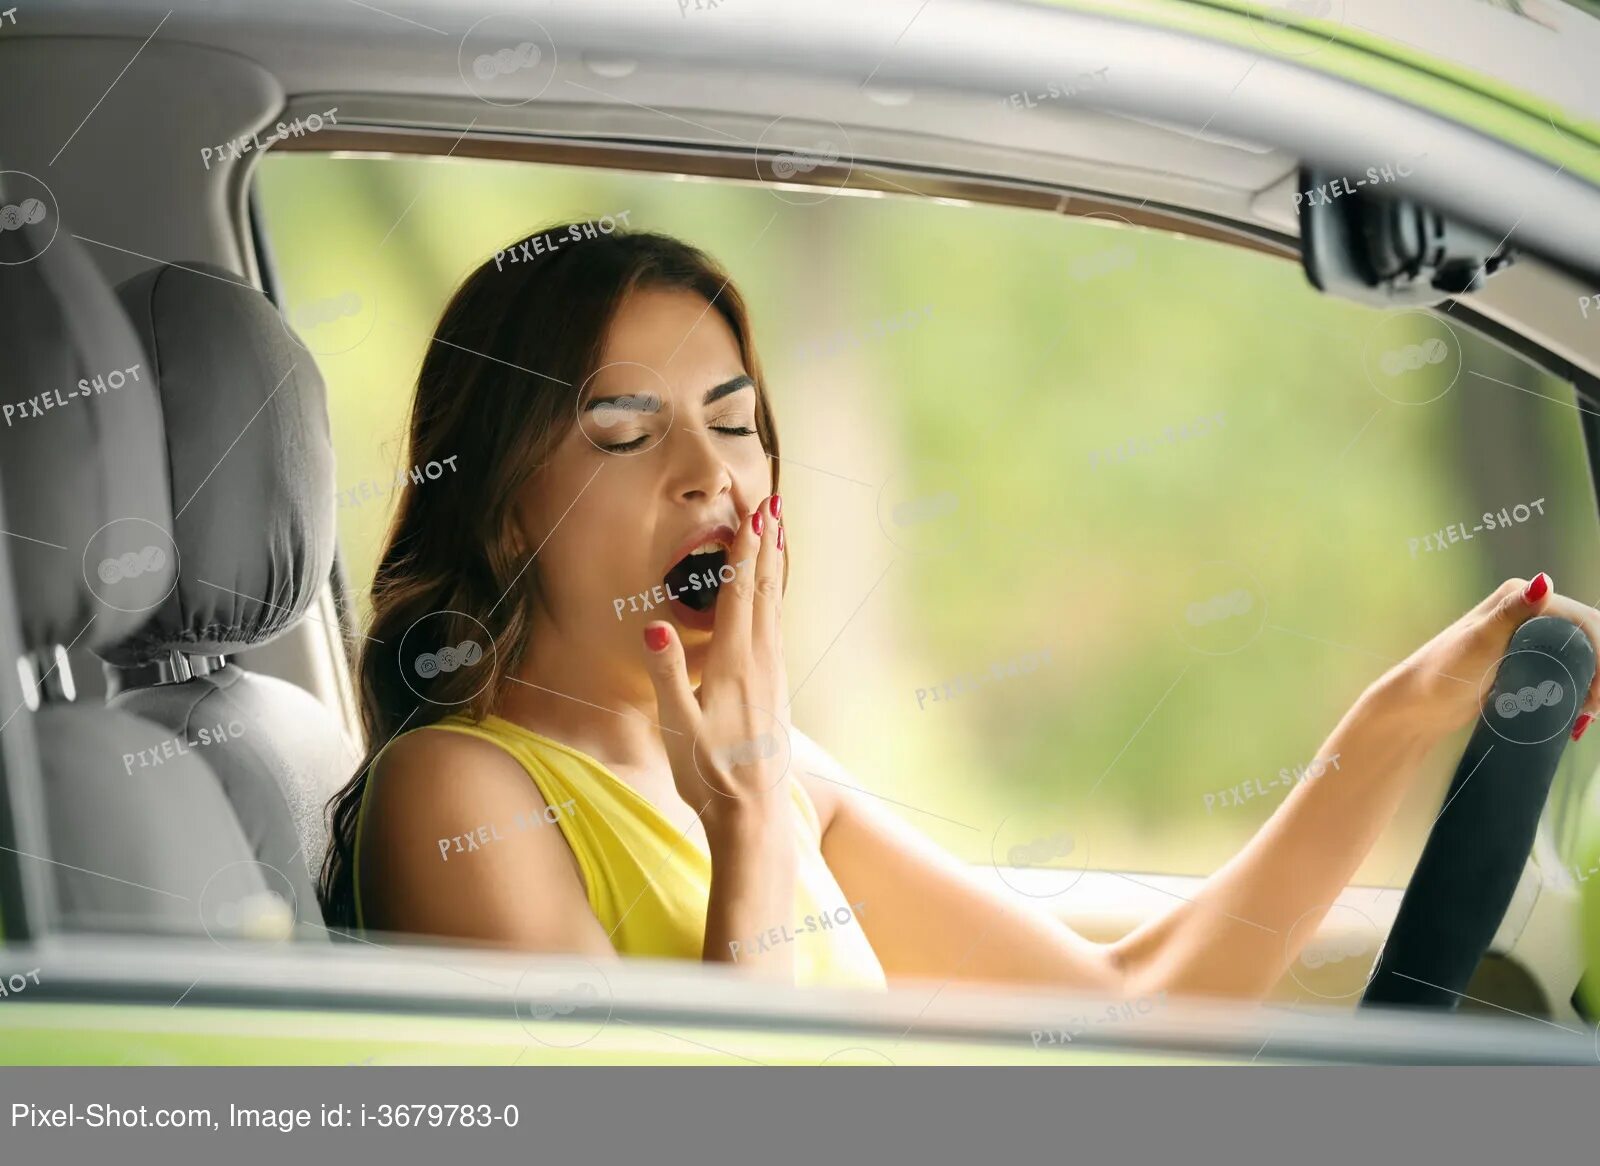 Машины зевали. Человек зевает за рулем. Девушка зевает. Женщина зевает за рулем.